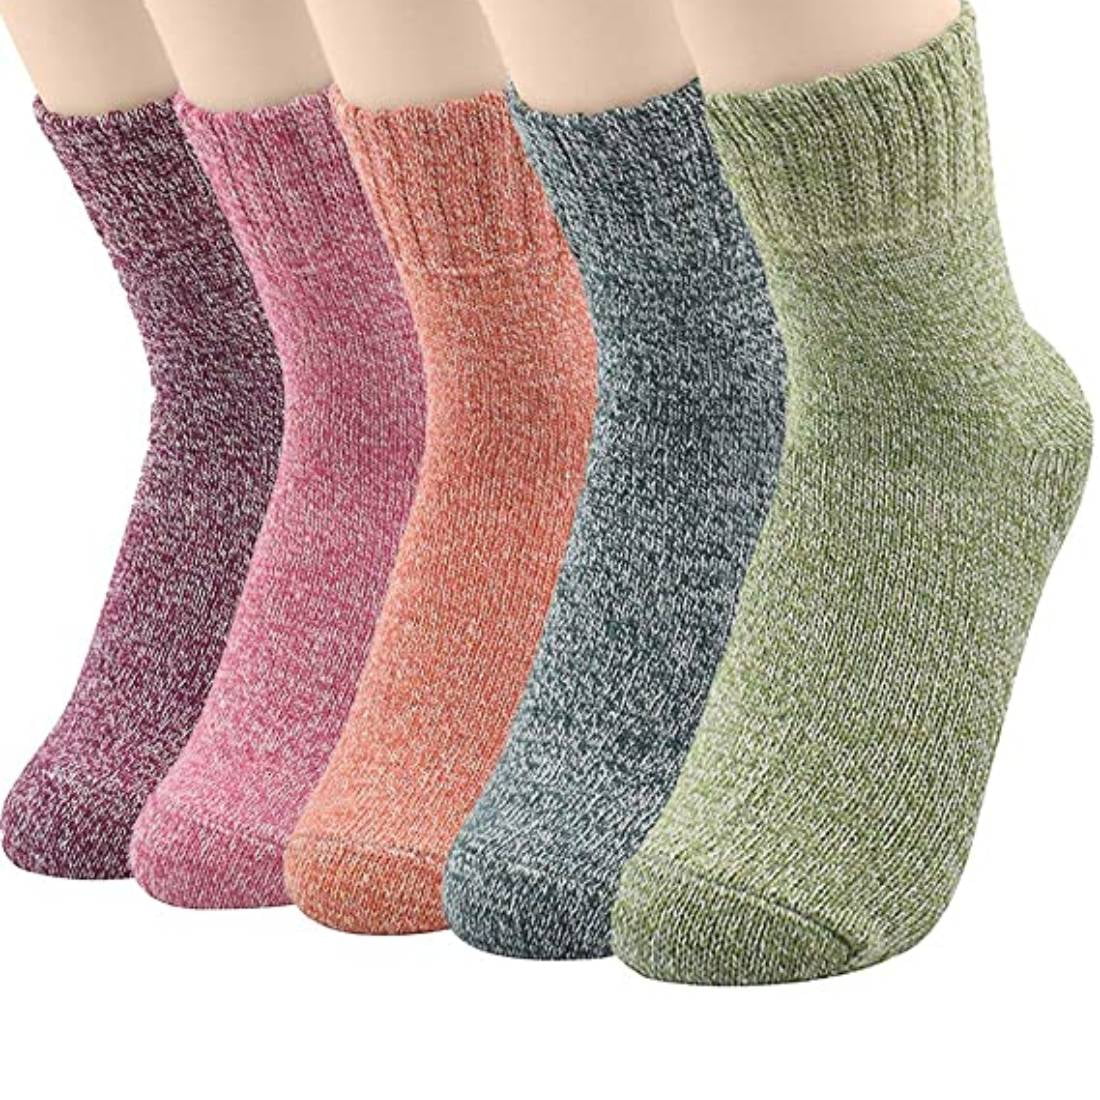 5 Pairs Women Cozy Thick Cotton Knit Warm Wool Winter Fall Crew Socks Set 